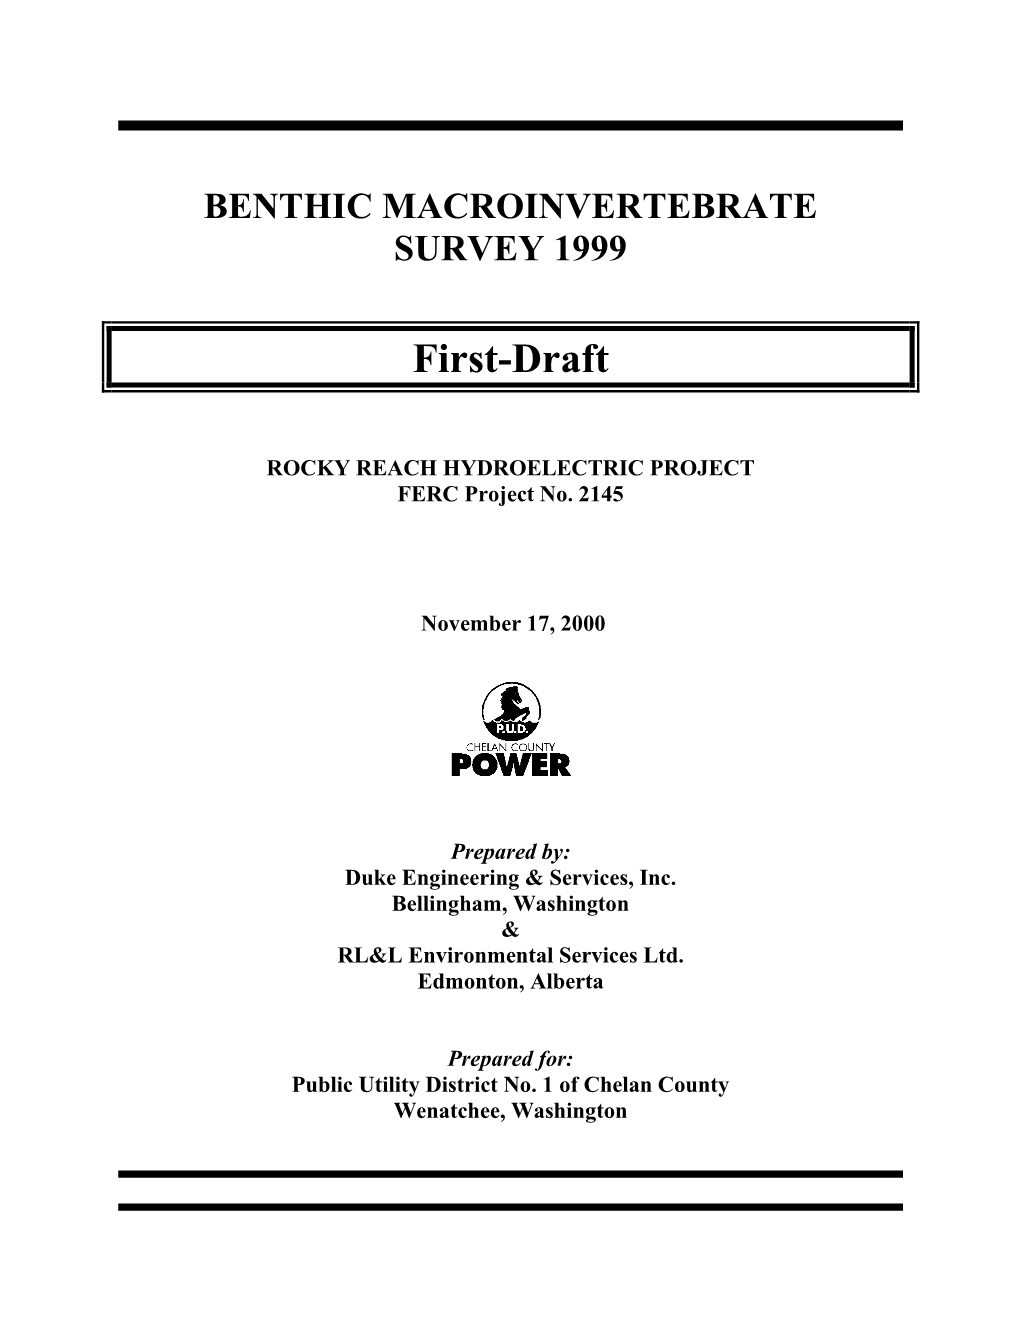 Benthic Macroinvertebrate Survey 1999